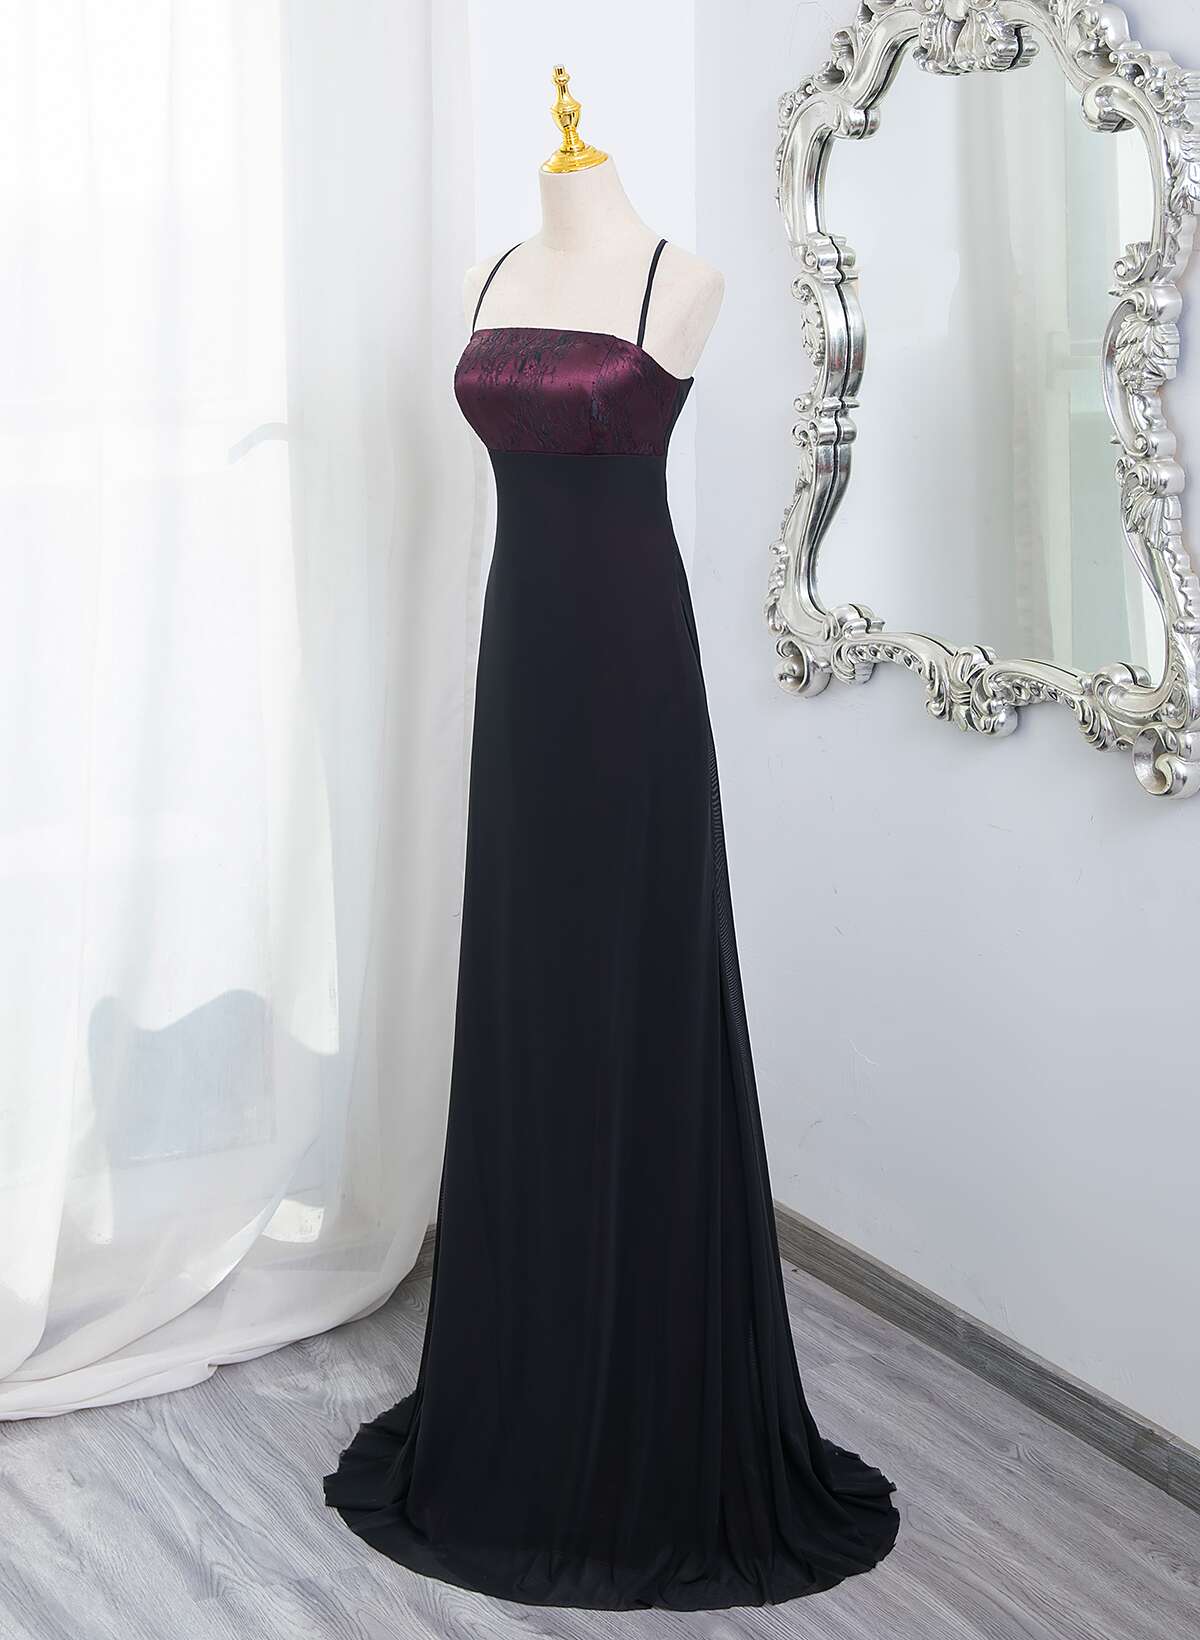 Black and Burgundy Straps Long Formal Dress, Black and Burgundy Prom Dress